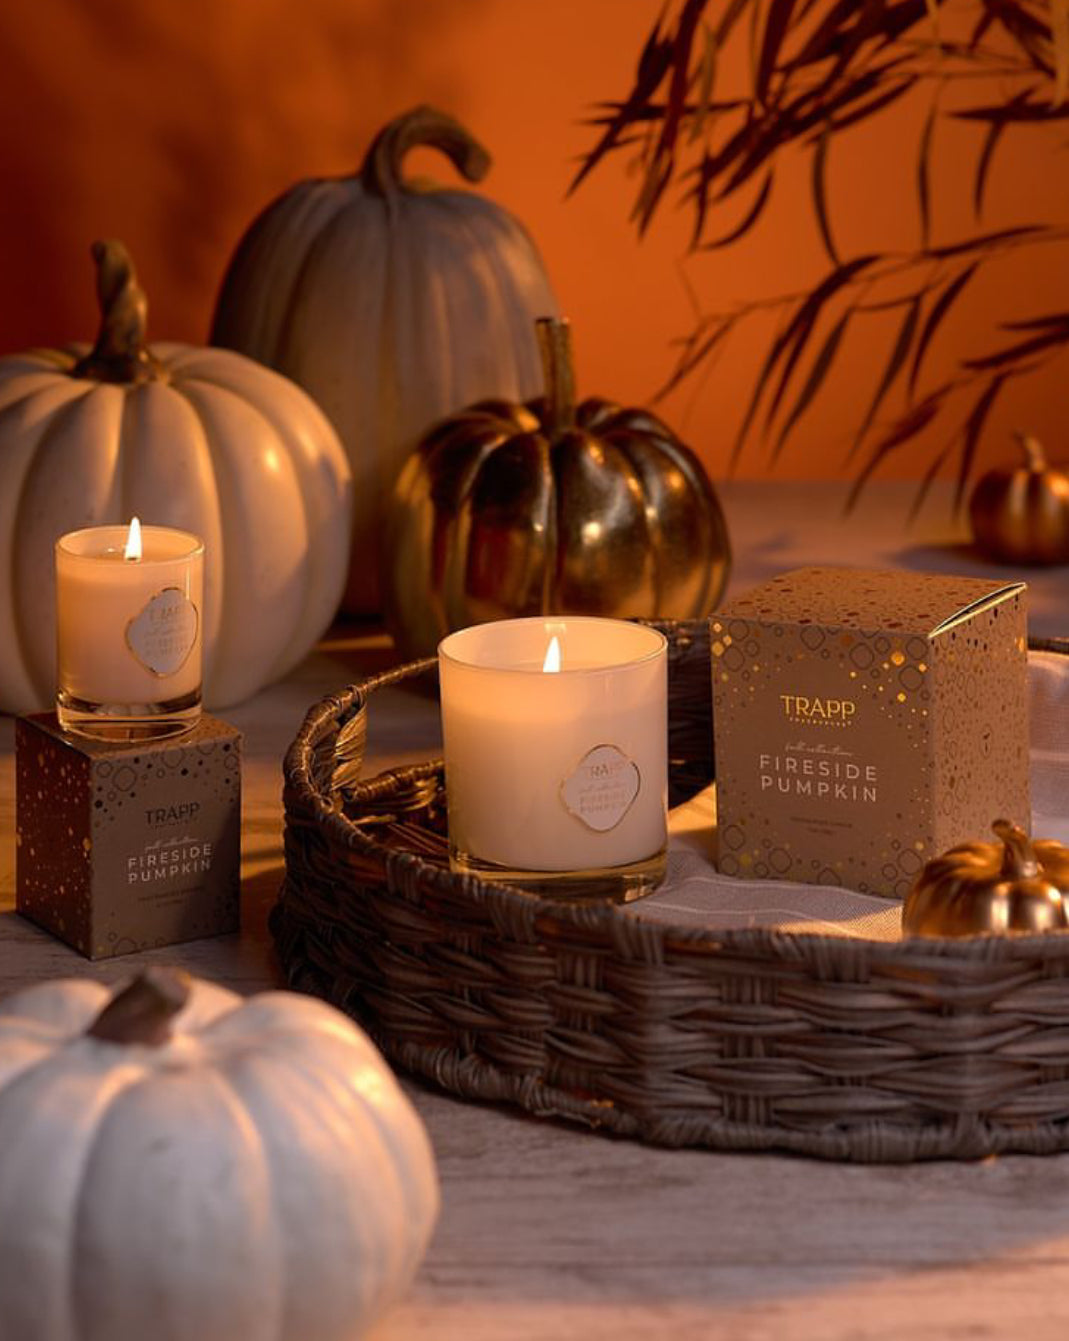 Fireside Pumpkin Trapp Candle